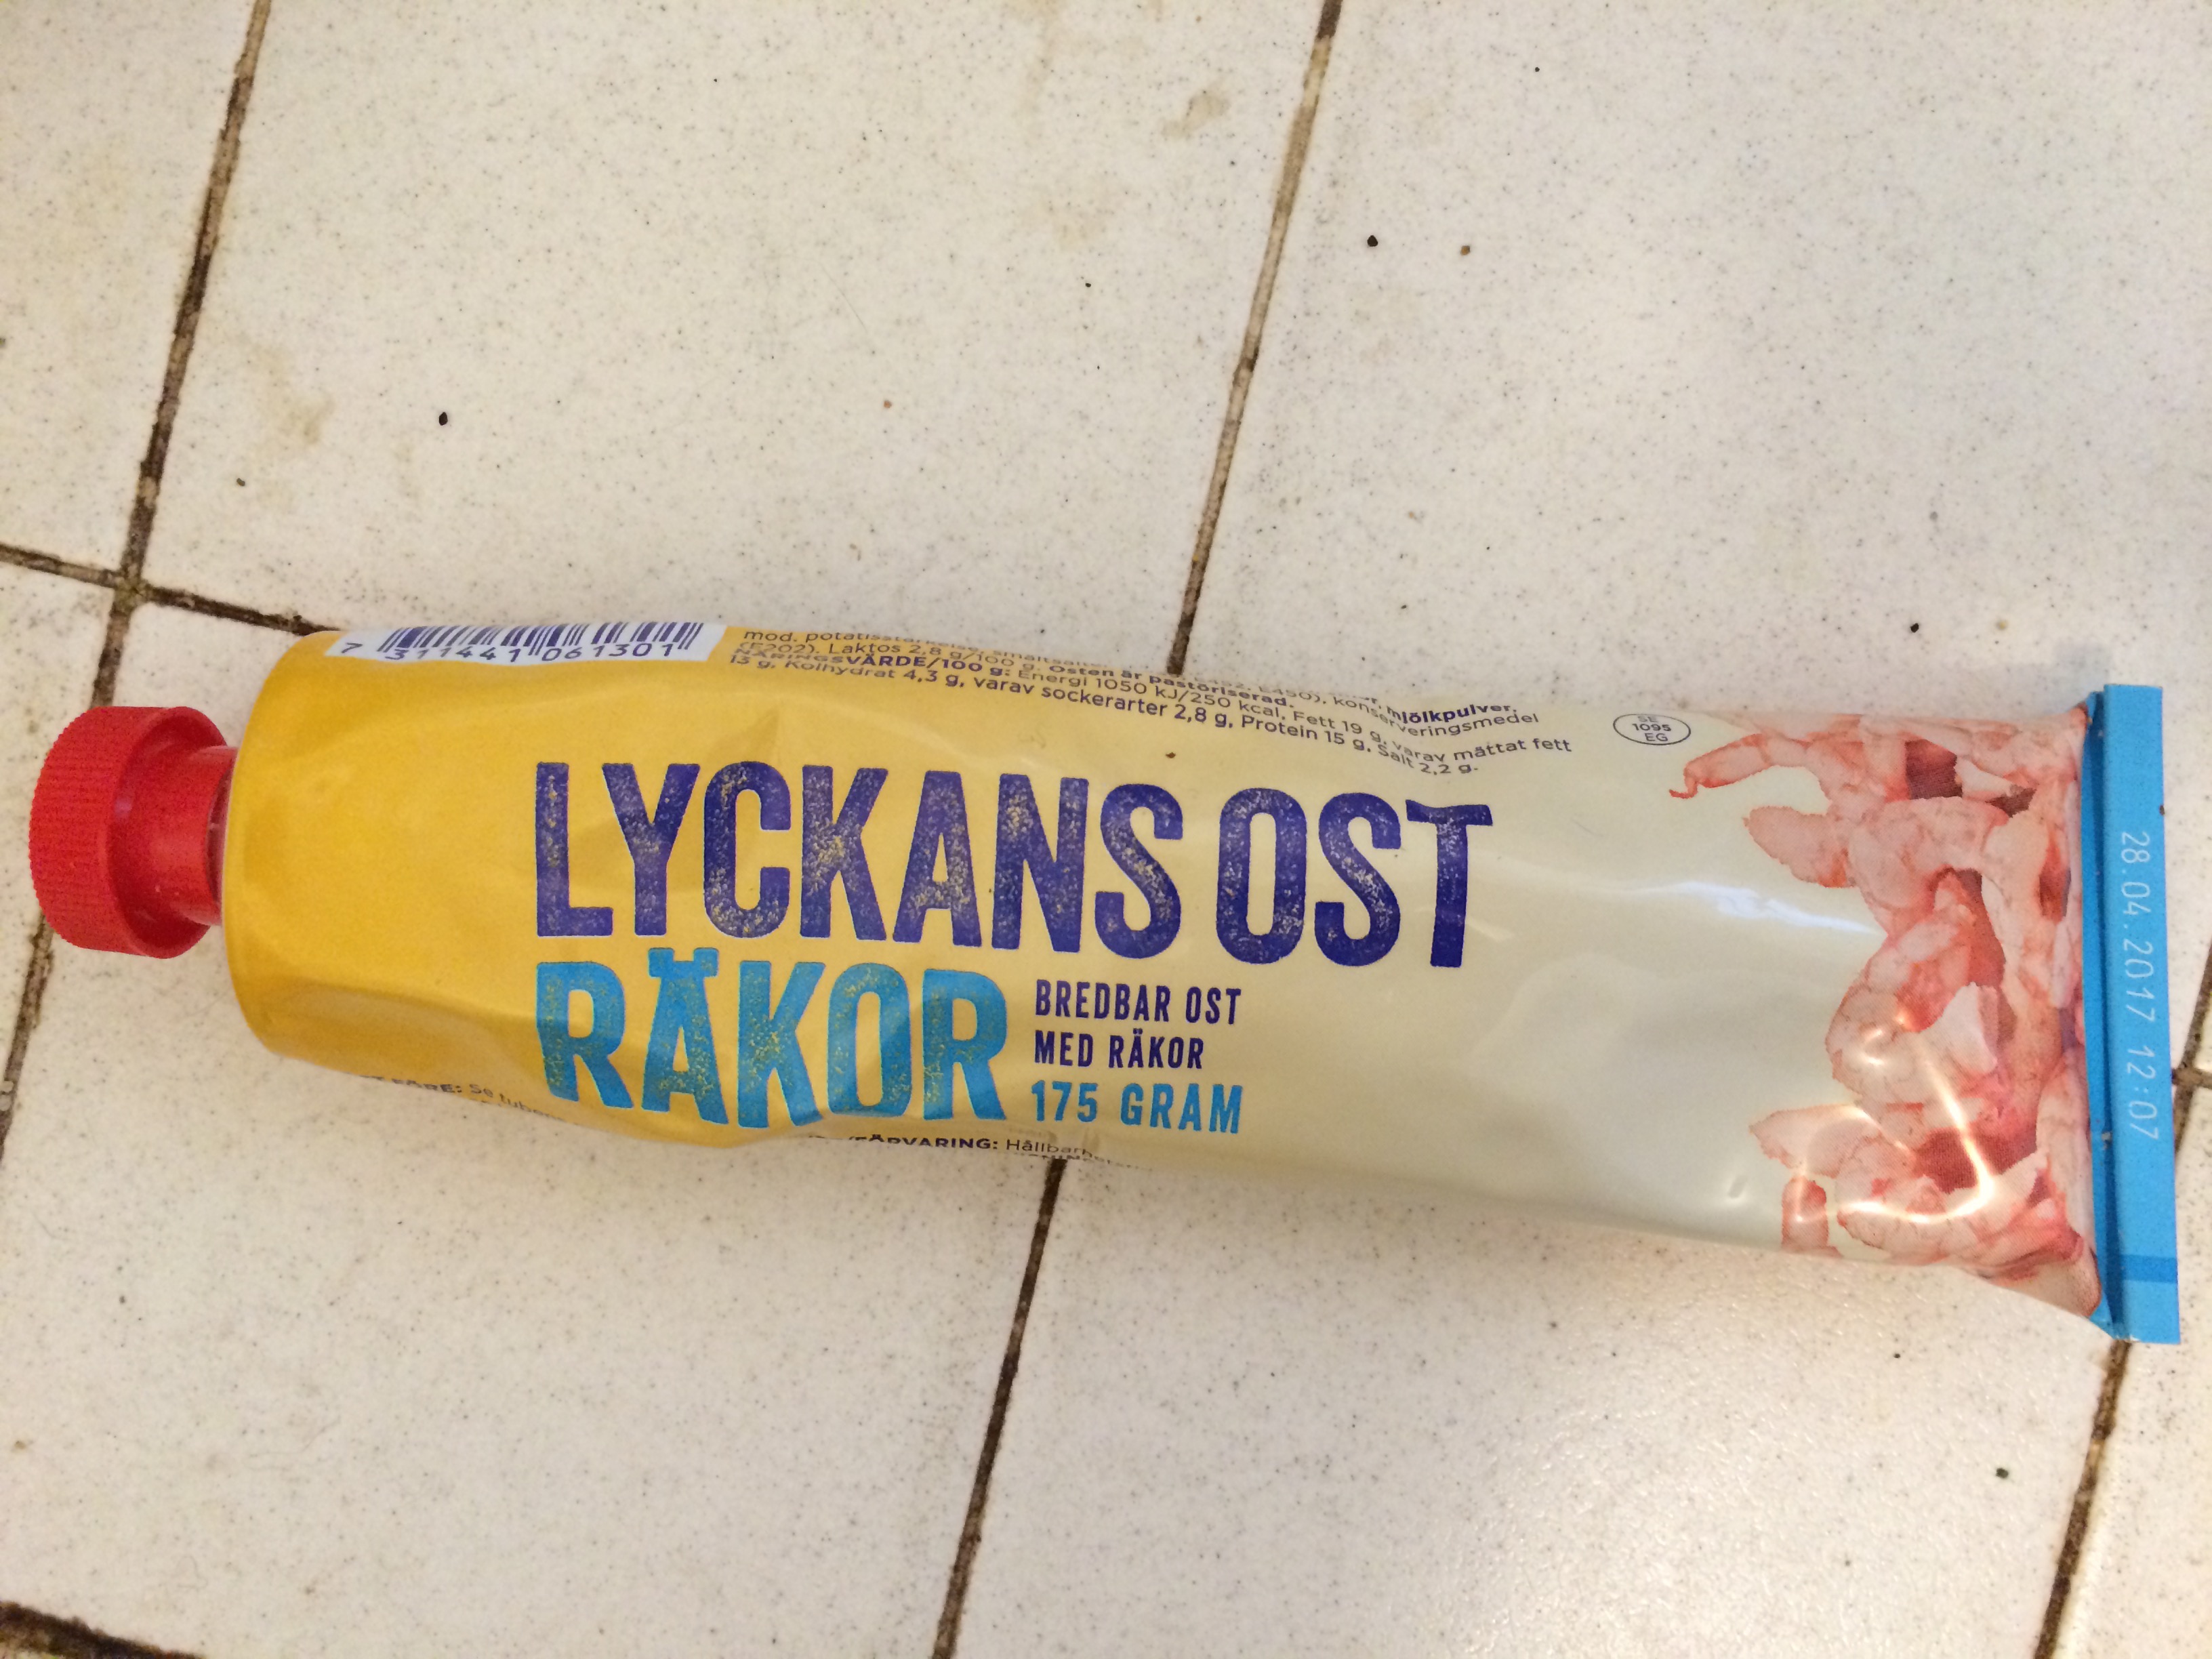 Lyckans ost rakor - swedish shrimp paste